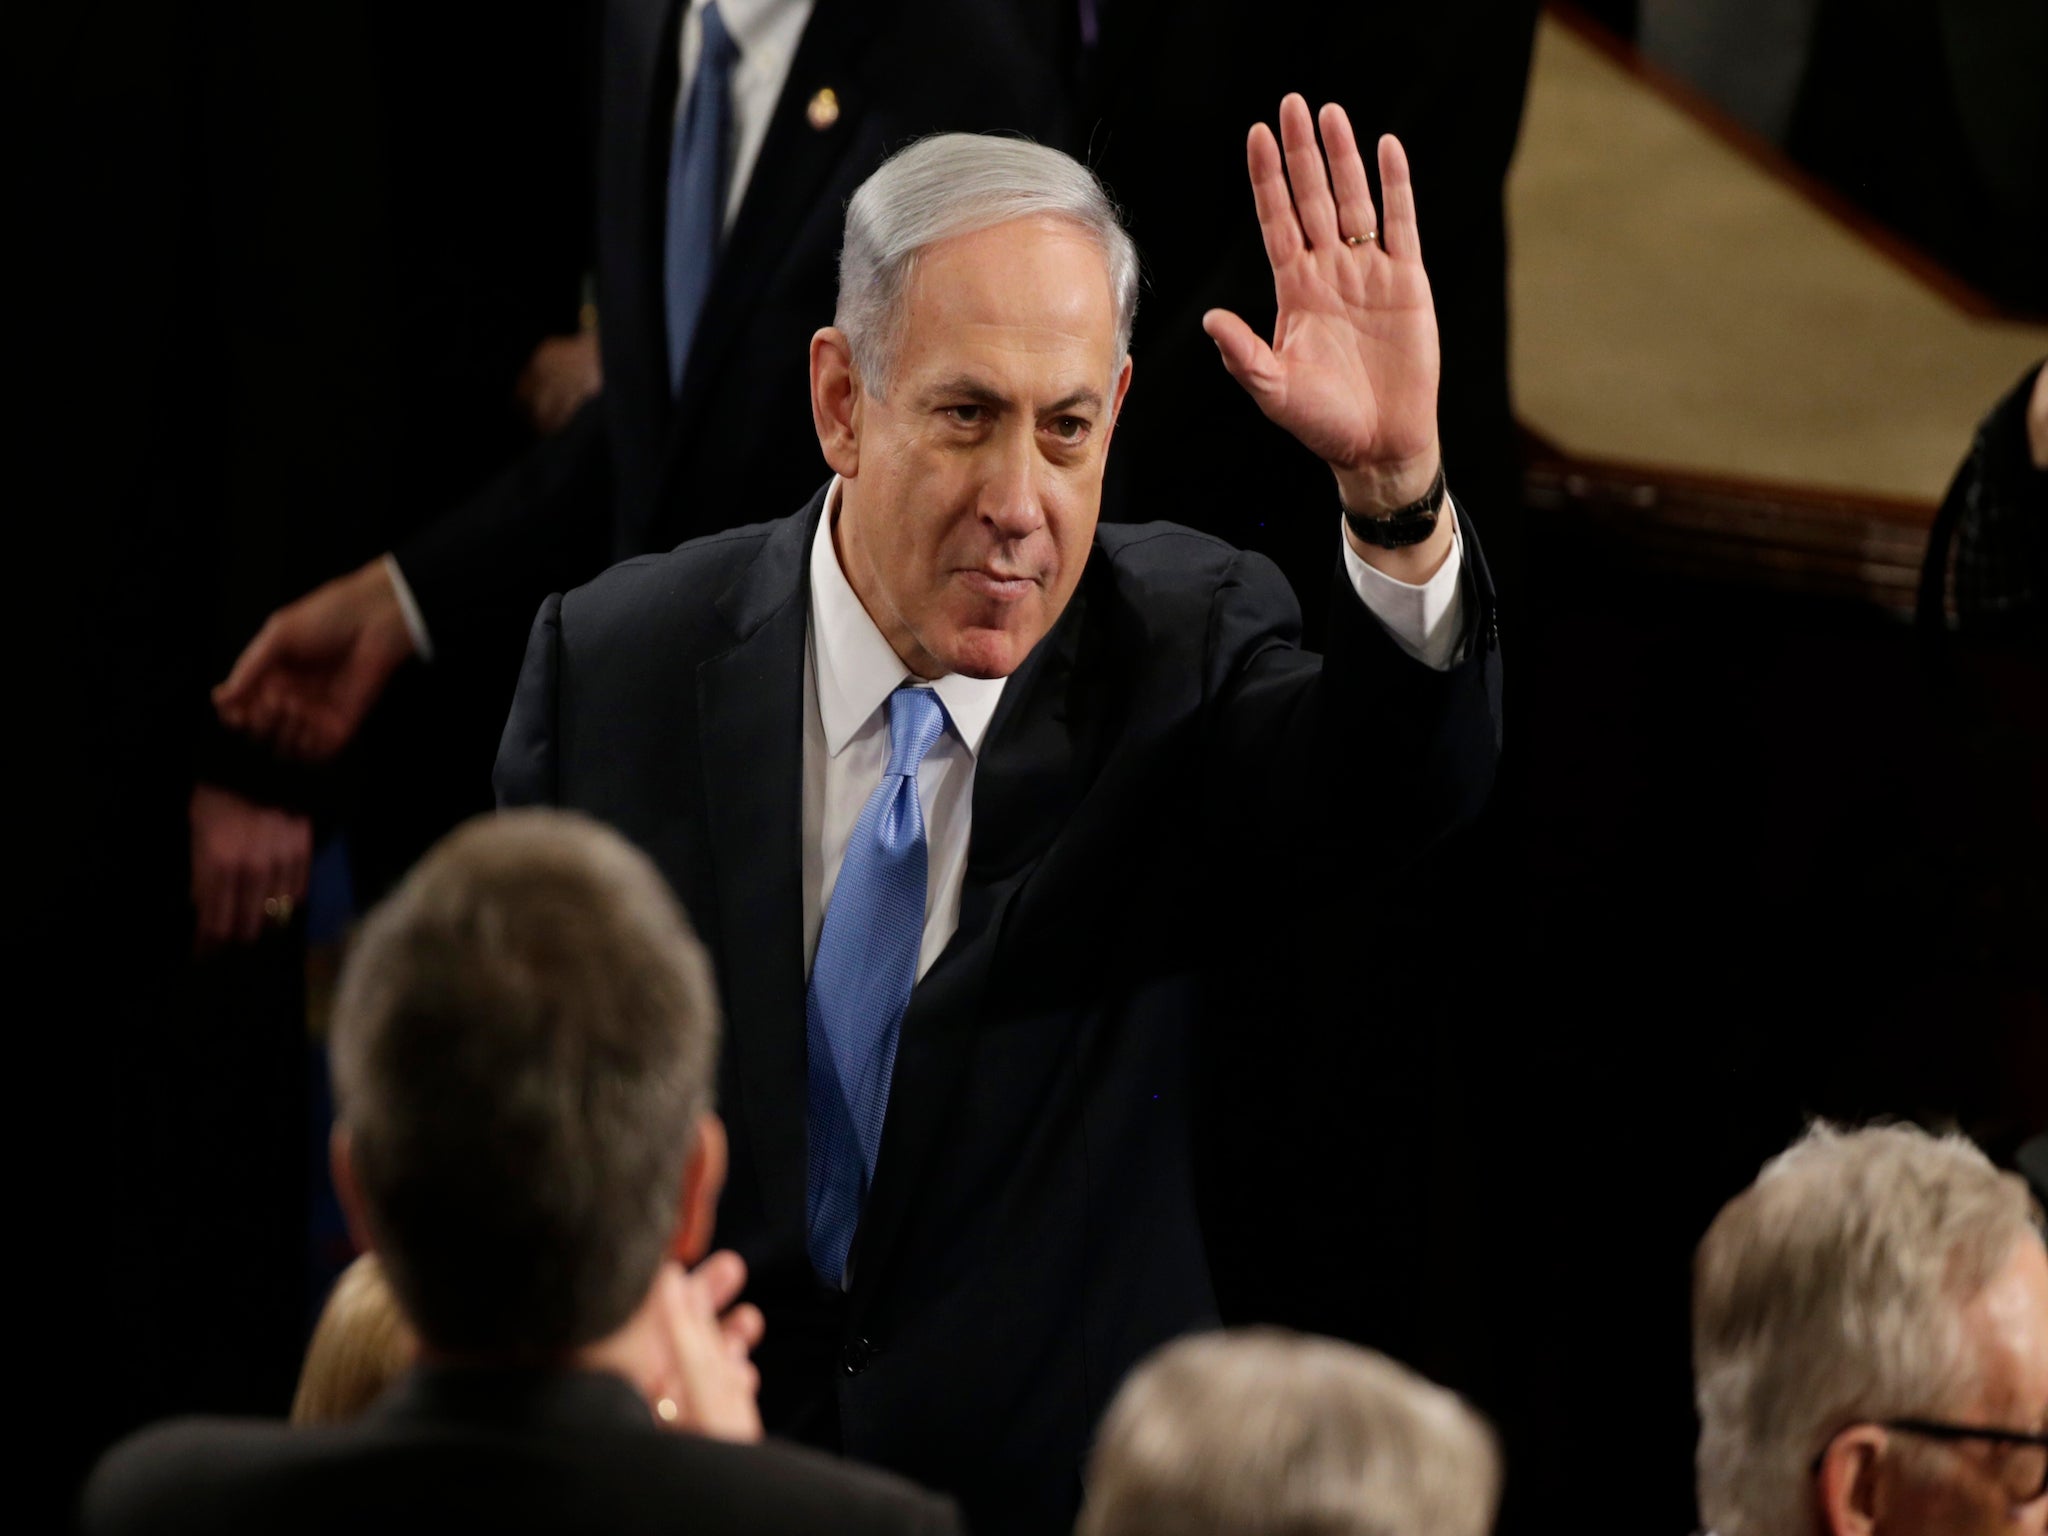 Mr Netanyahu spoke to Congress